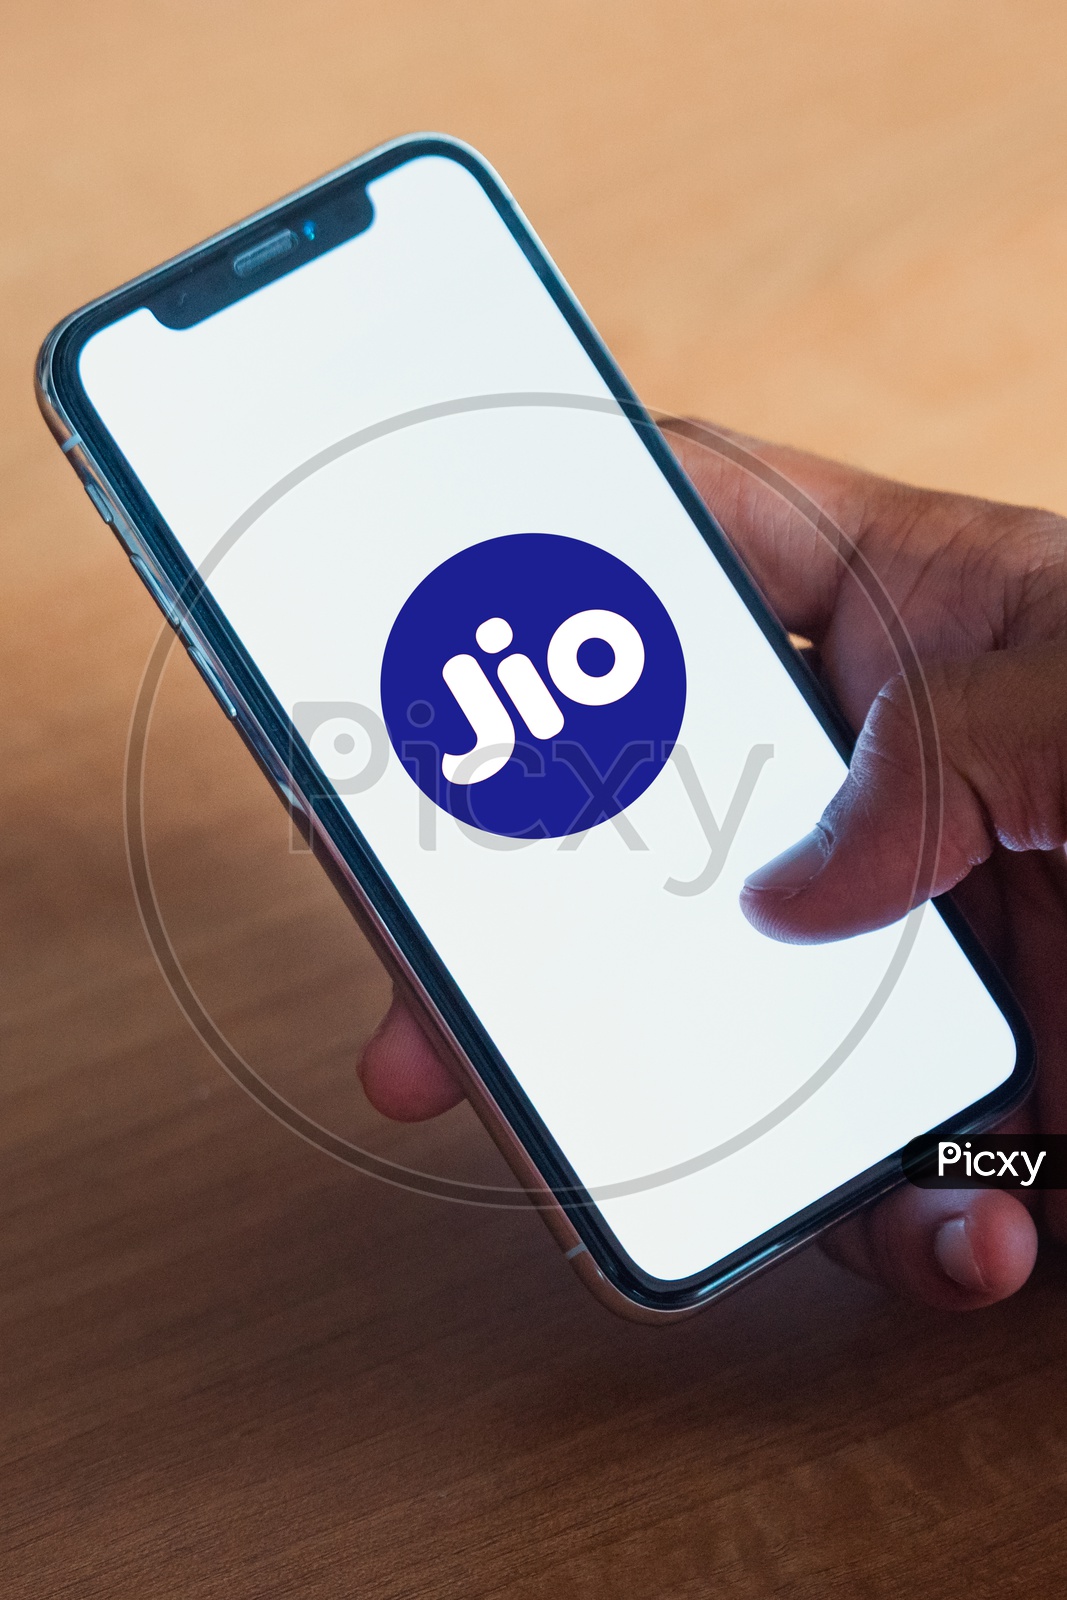 Reliance Jio Digital Life on smartphone screen